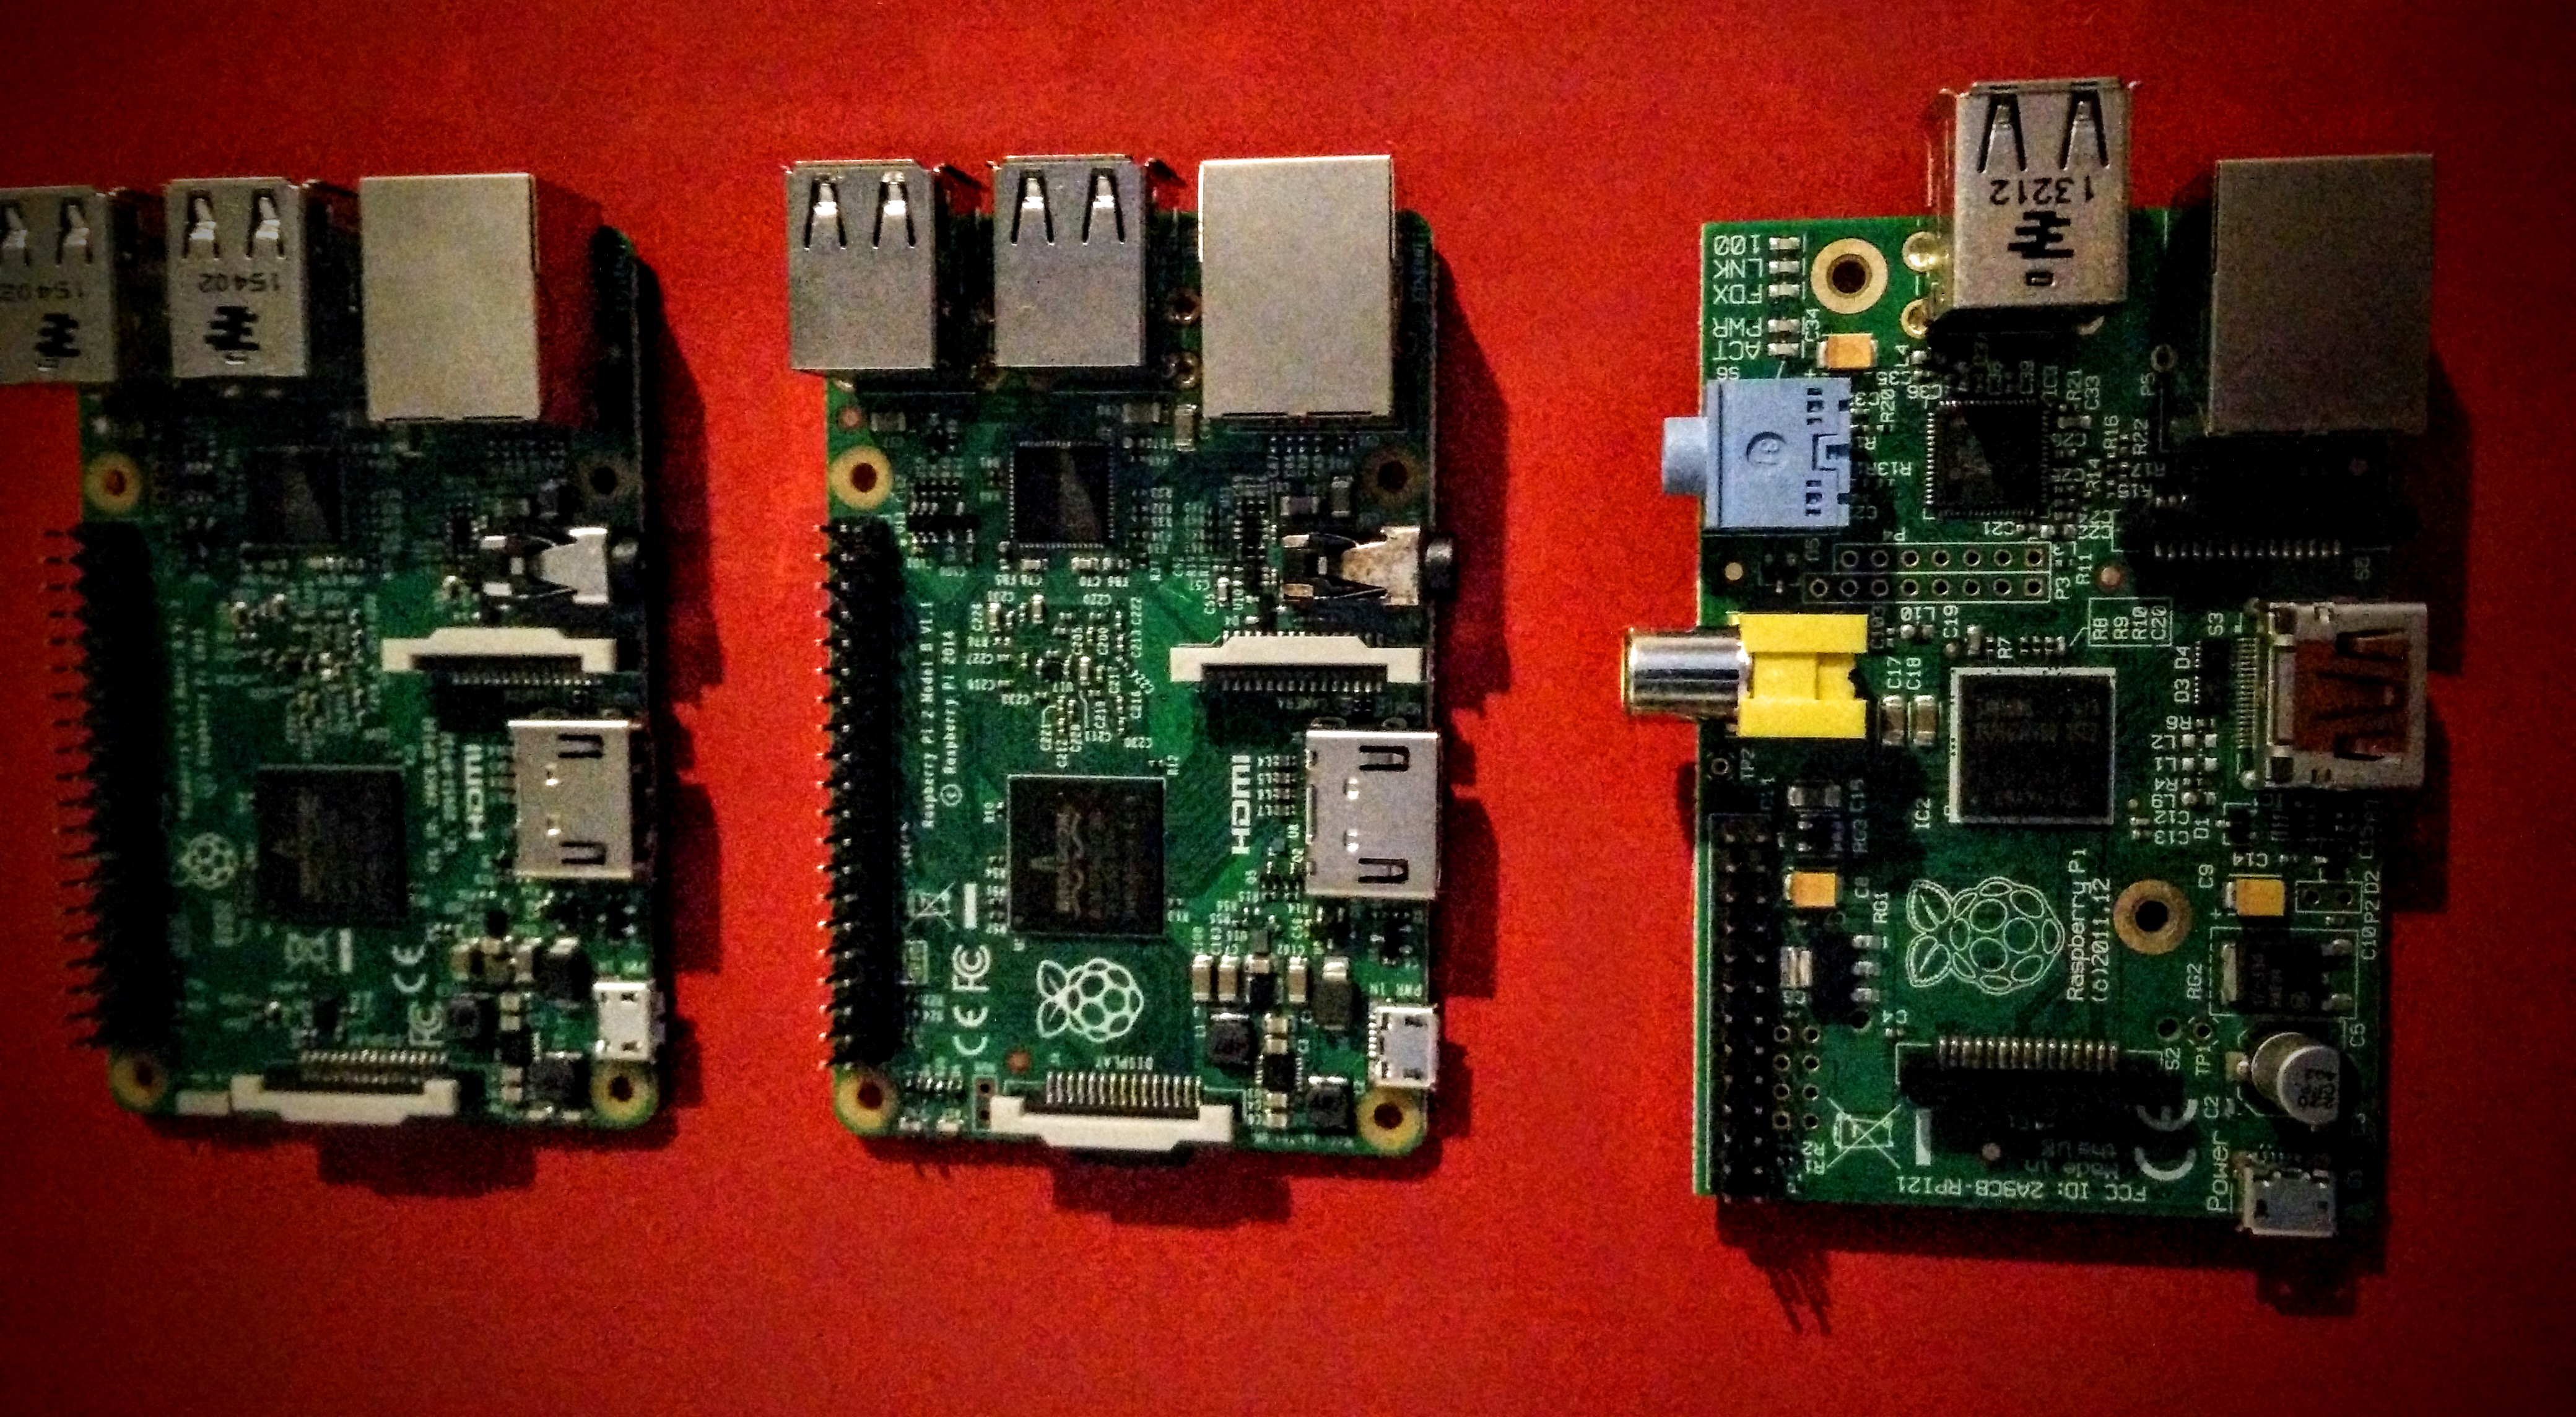 Raspberry Pi 3 to Raspberry Pi 2 Comparison